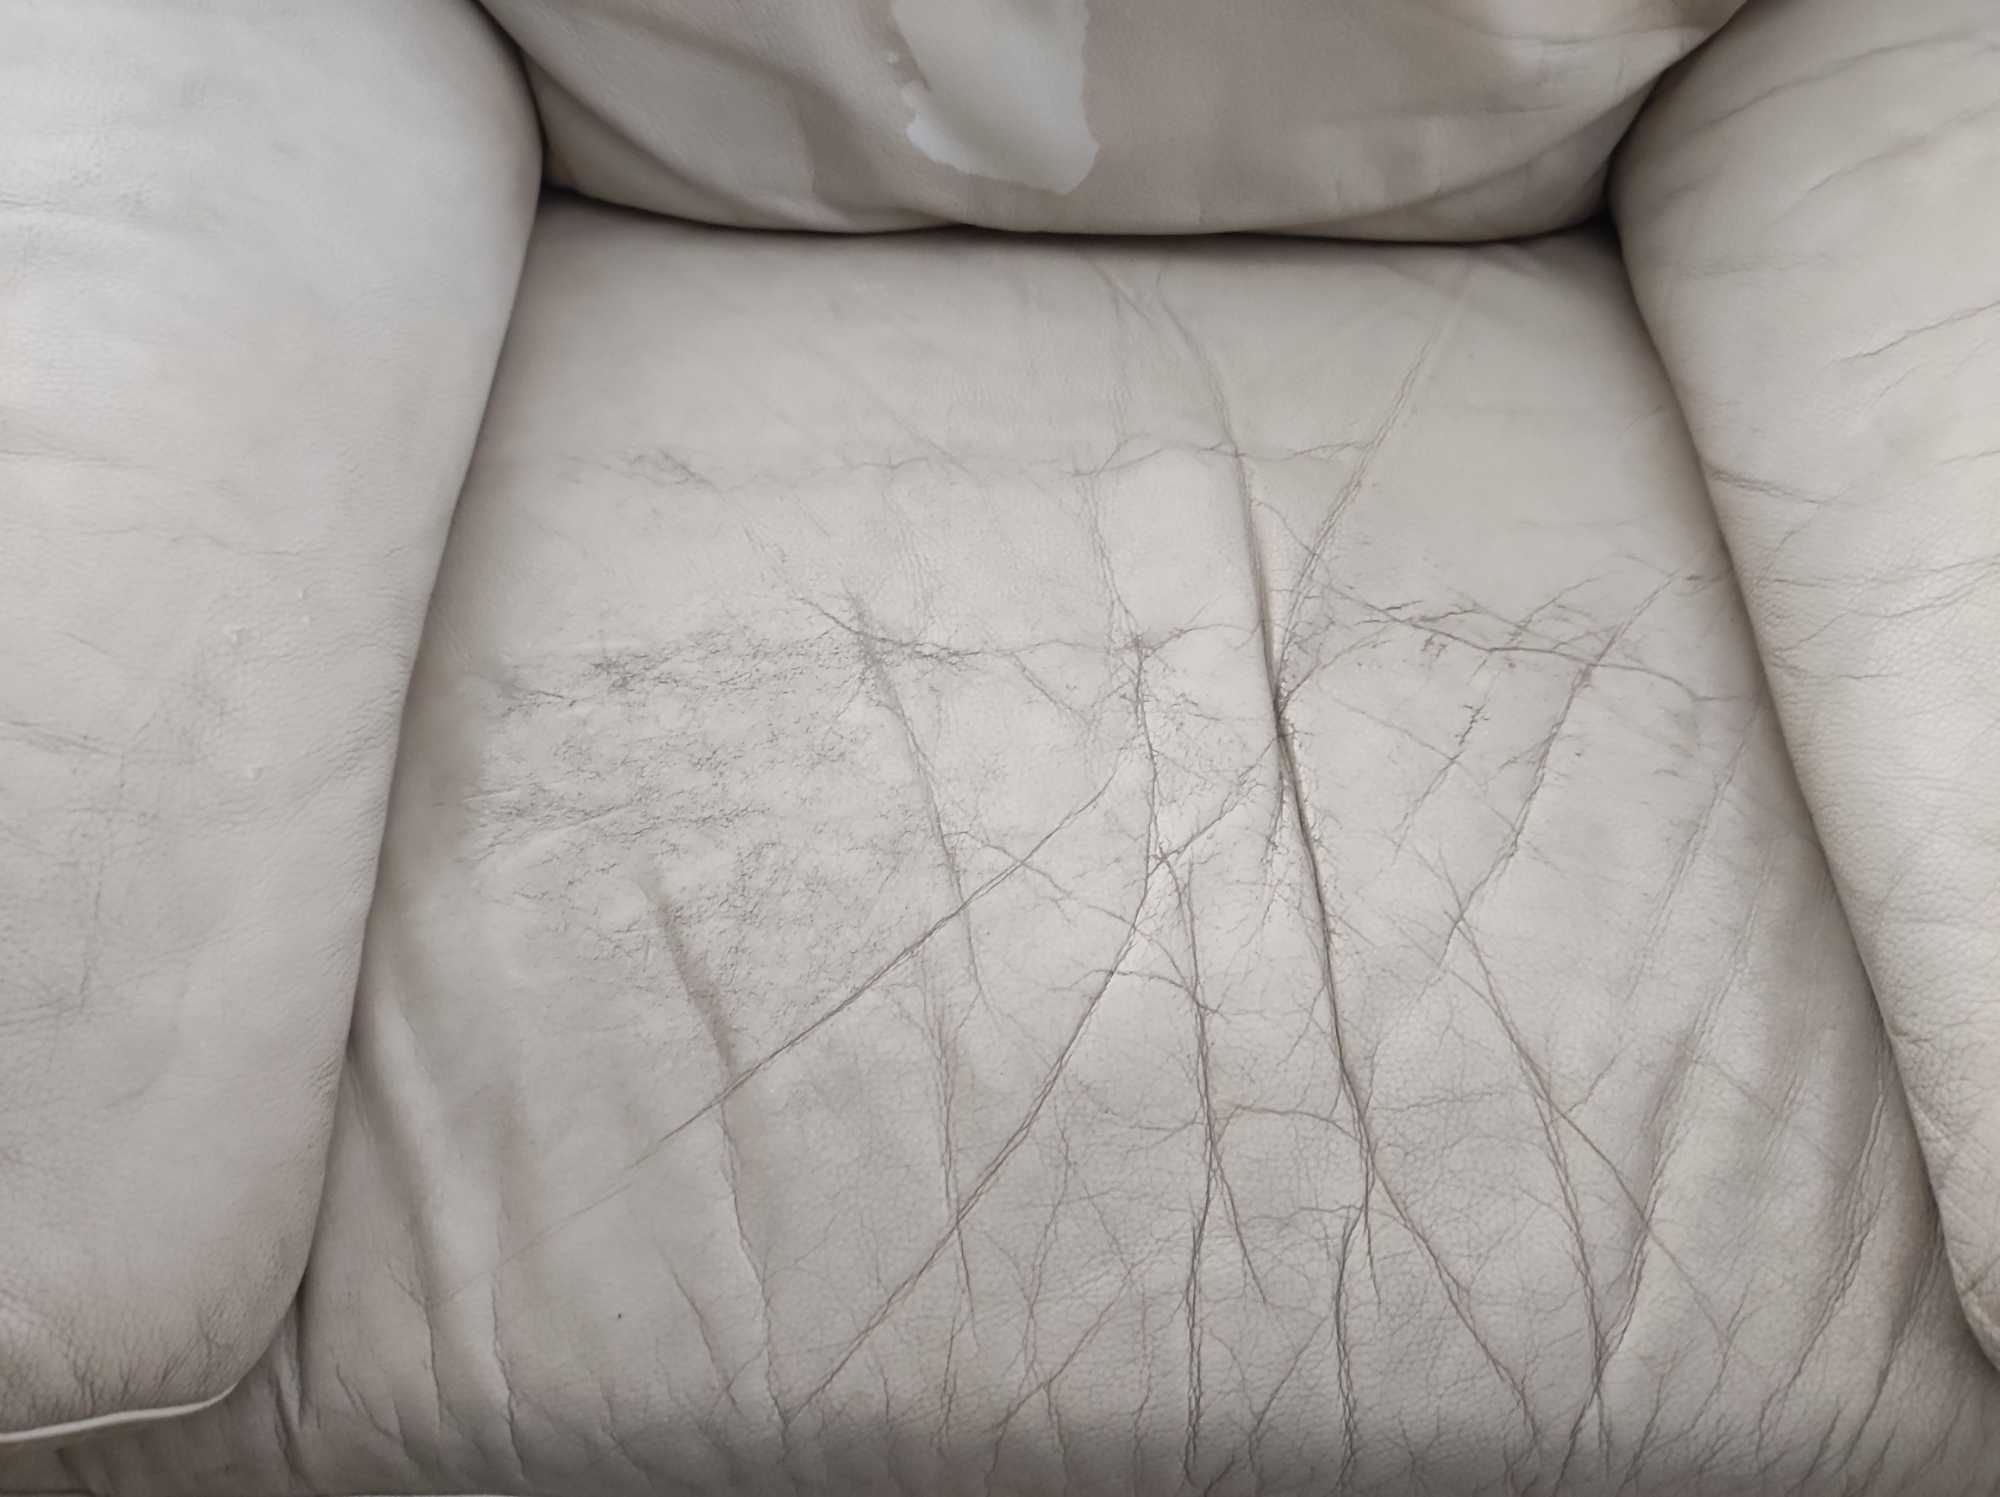 Fotel skórzany kolor ecru